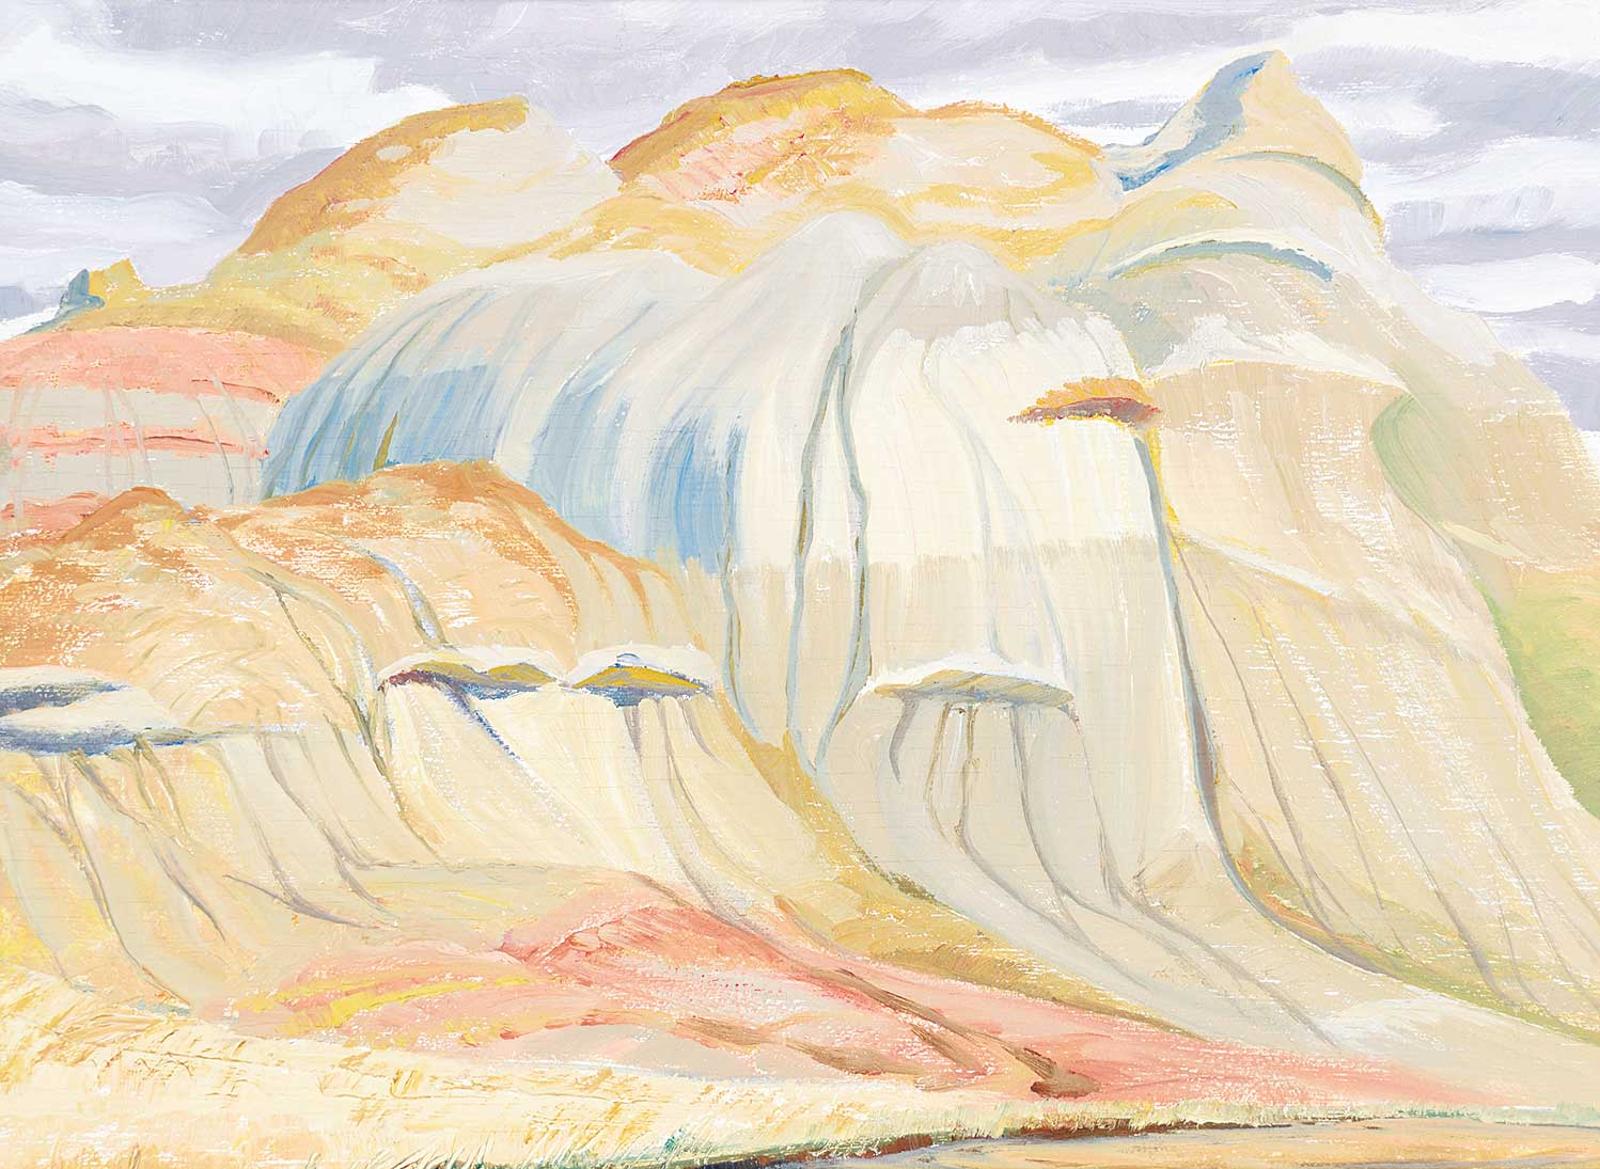 Doris Jean McCarthy (1910-2010) - Little Mountains, Badlands